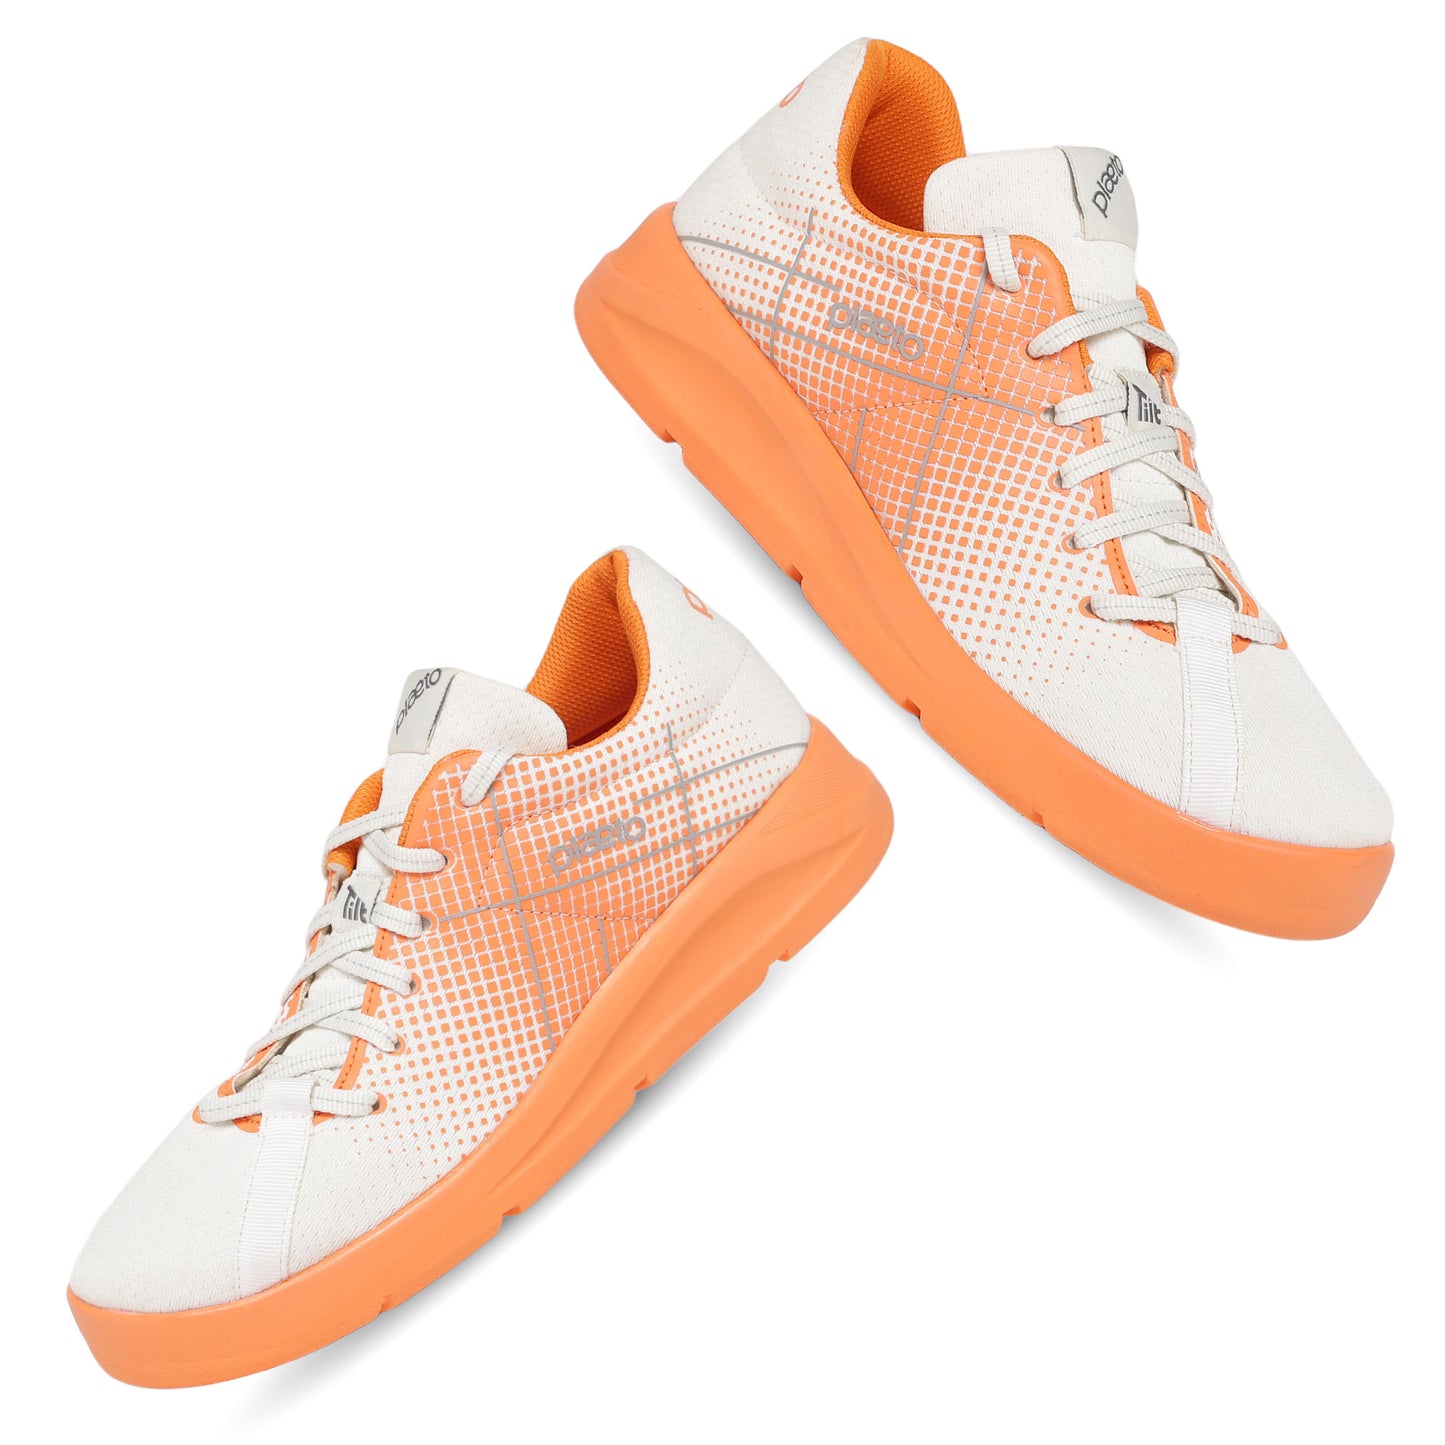 Block 5 Women's Multiplay Sneakers - White / Orange